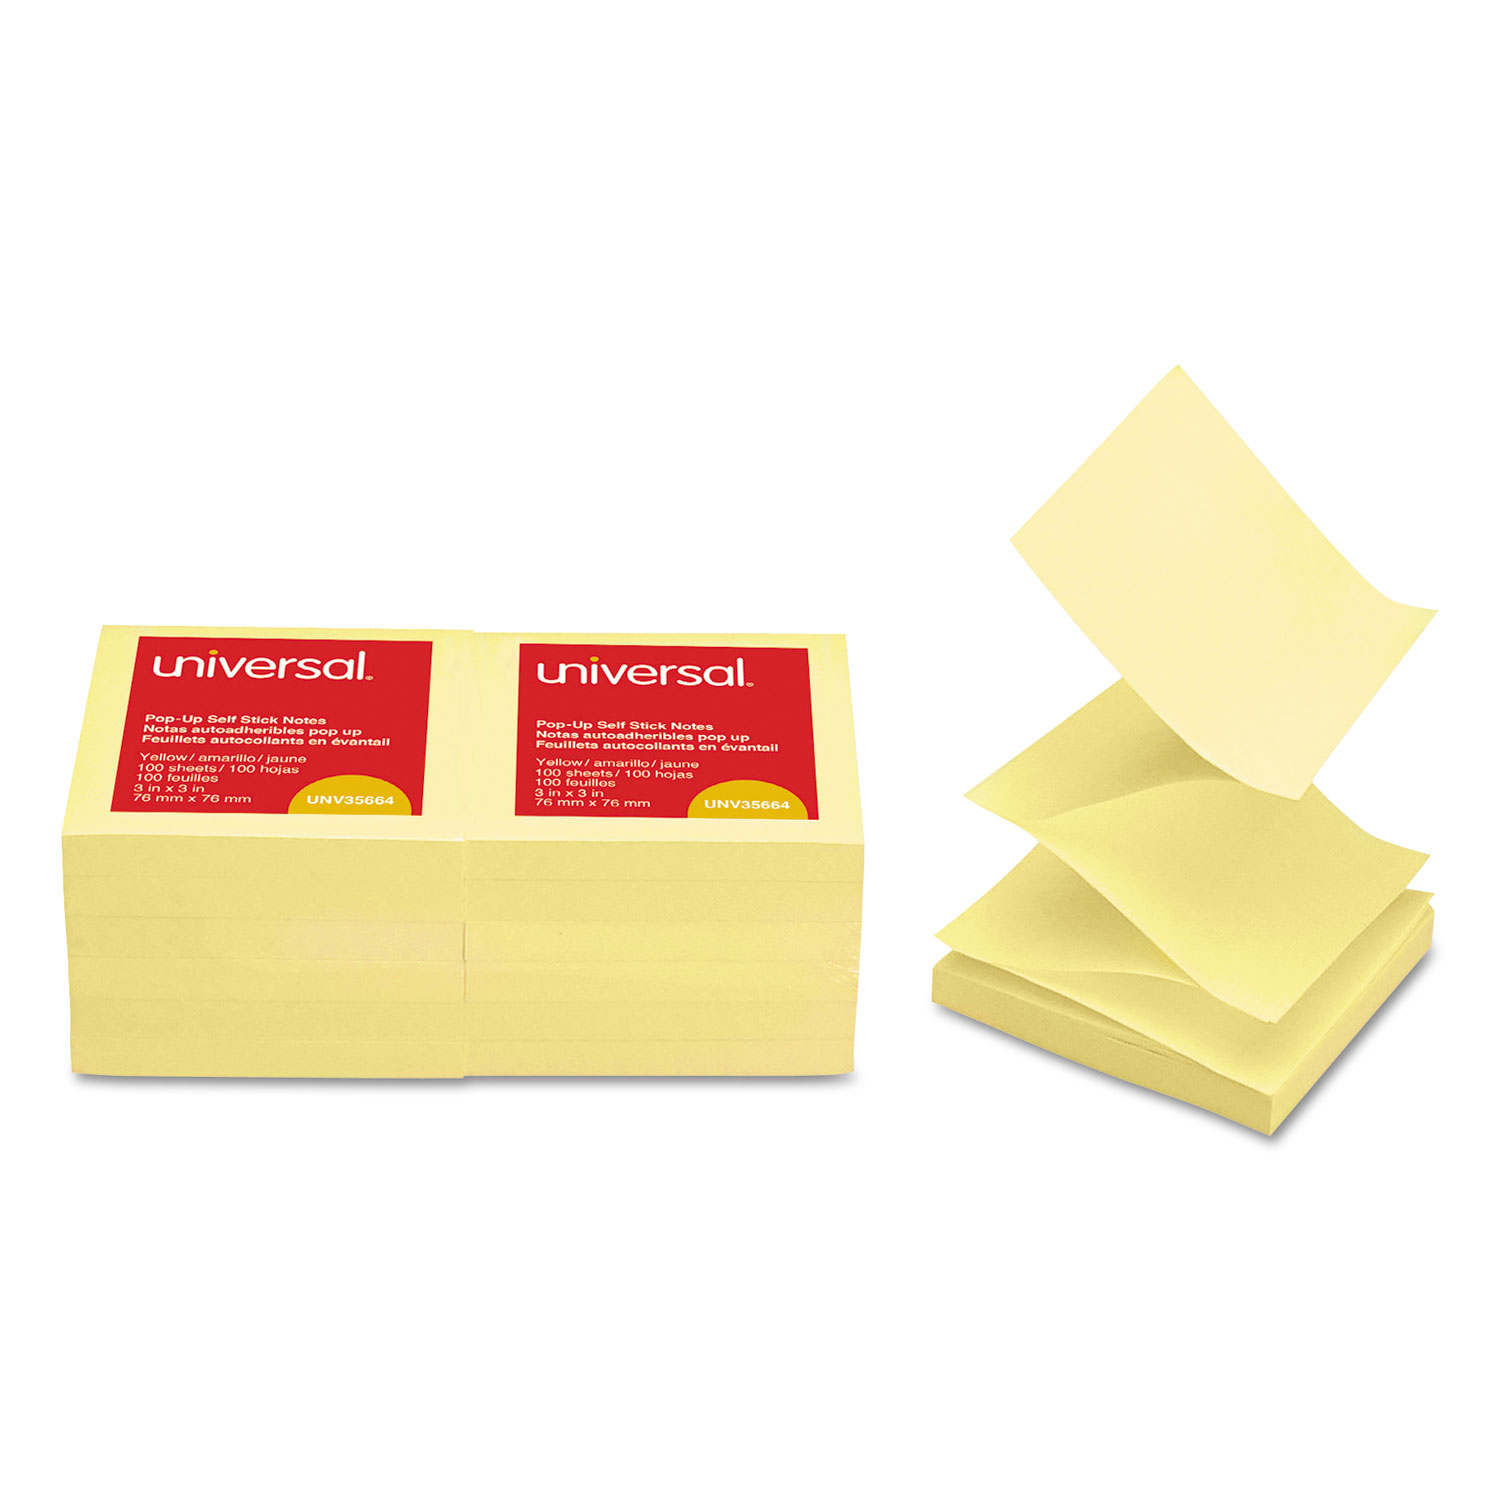  Universal UNV35664 Fan-Folded Self-Stick Pop-Up Note Pads, 3 x 3, Yellow, 100-Sheet, 12/Pack (UNV35664) 